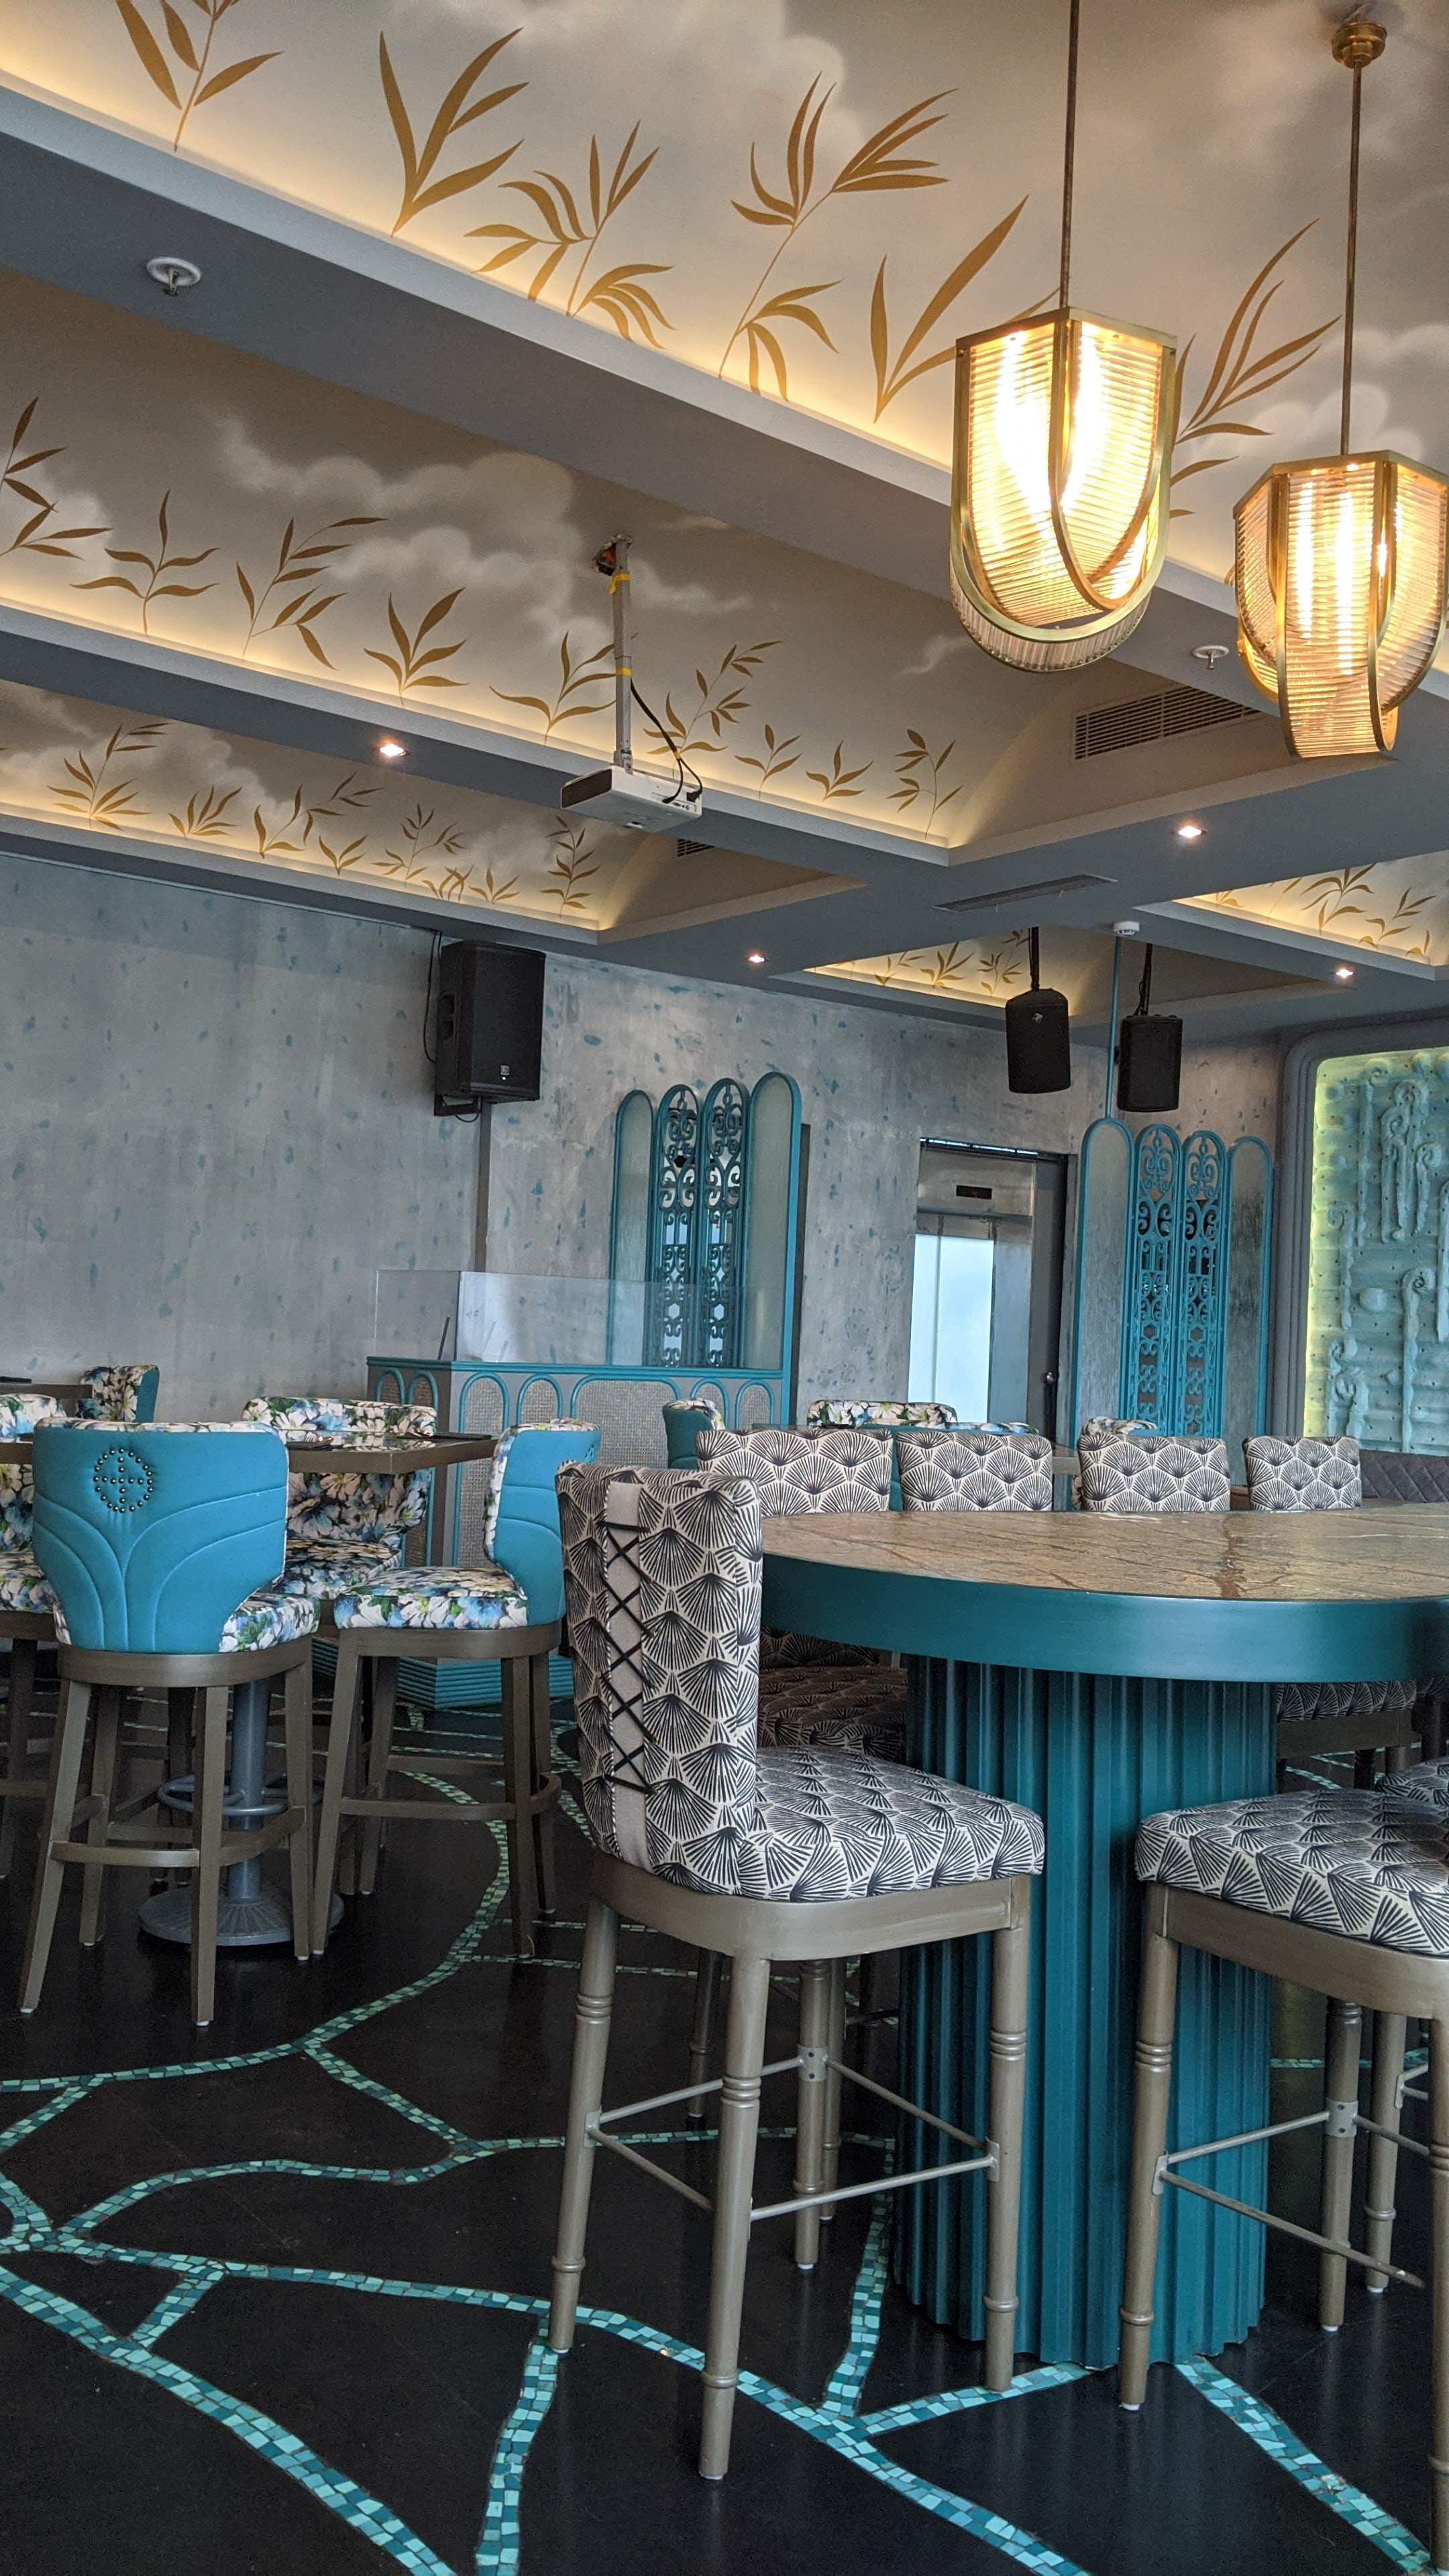 Turquoise,Furniture,Room,Chair,Table,Interior design,Building,Lighting,Ceiling,Restaurant